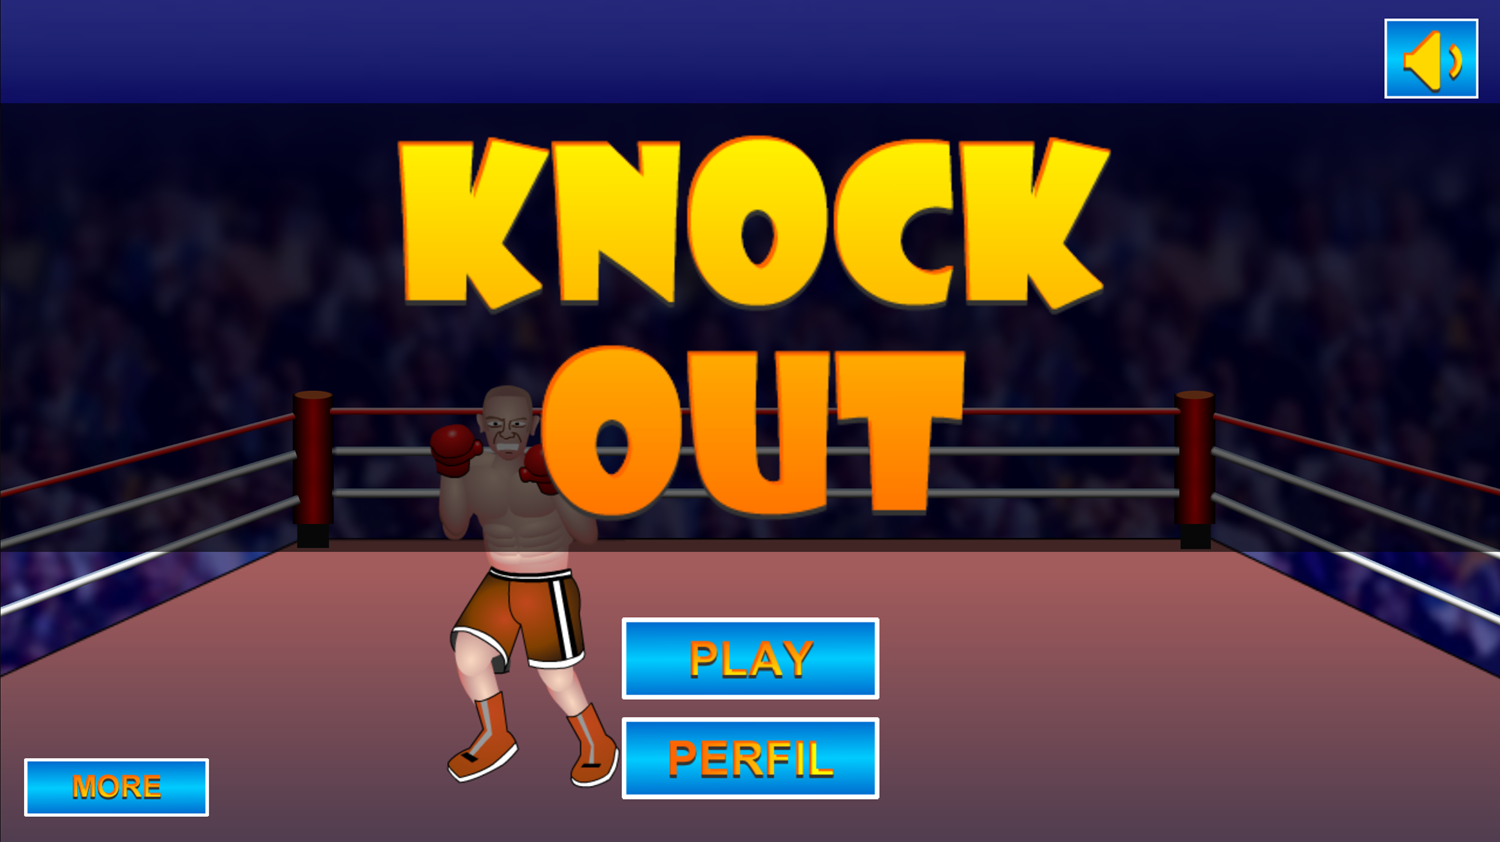 Knock Out Boxing Welcome Screen Screenshot.